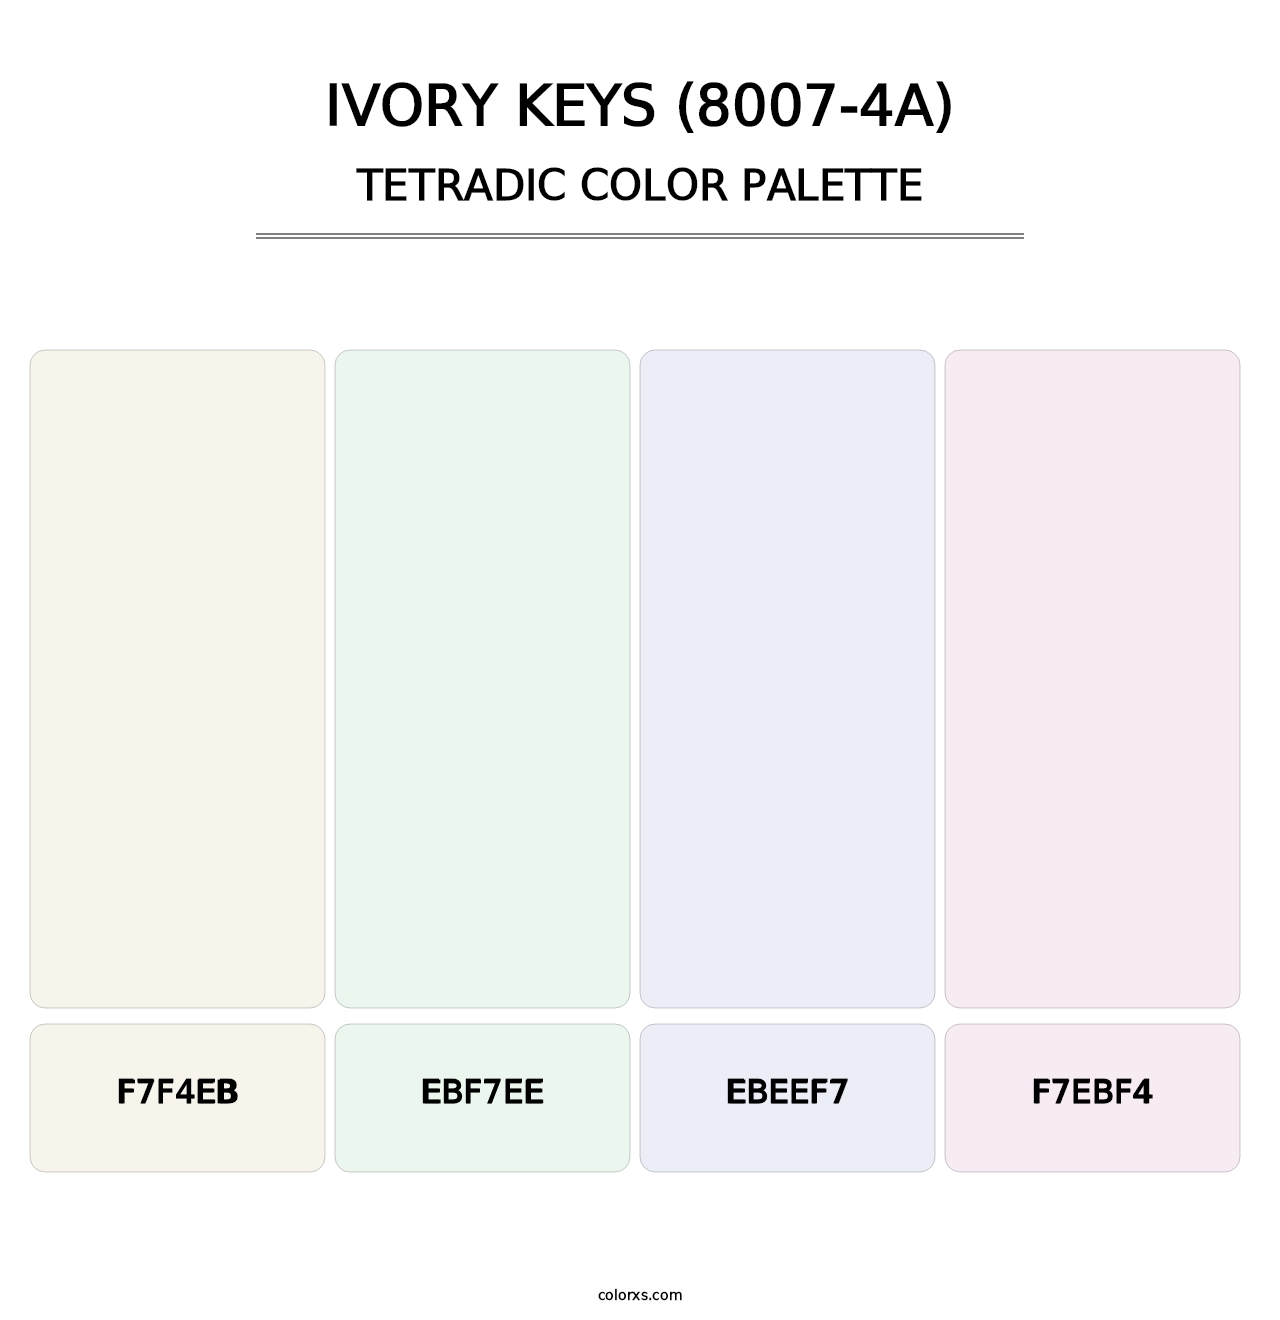 Ivory Keys (8007-4A) - Tetradic Color Palette